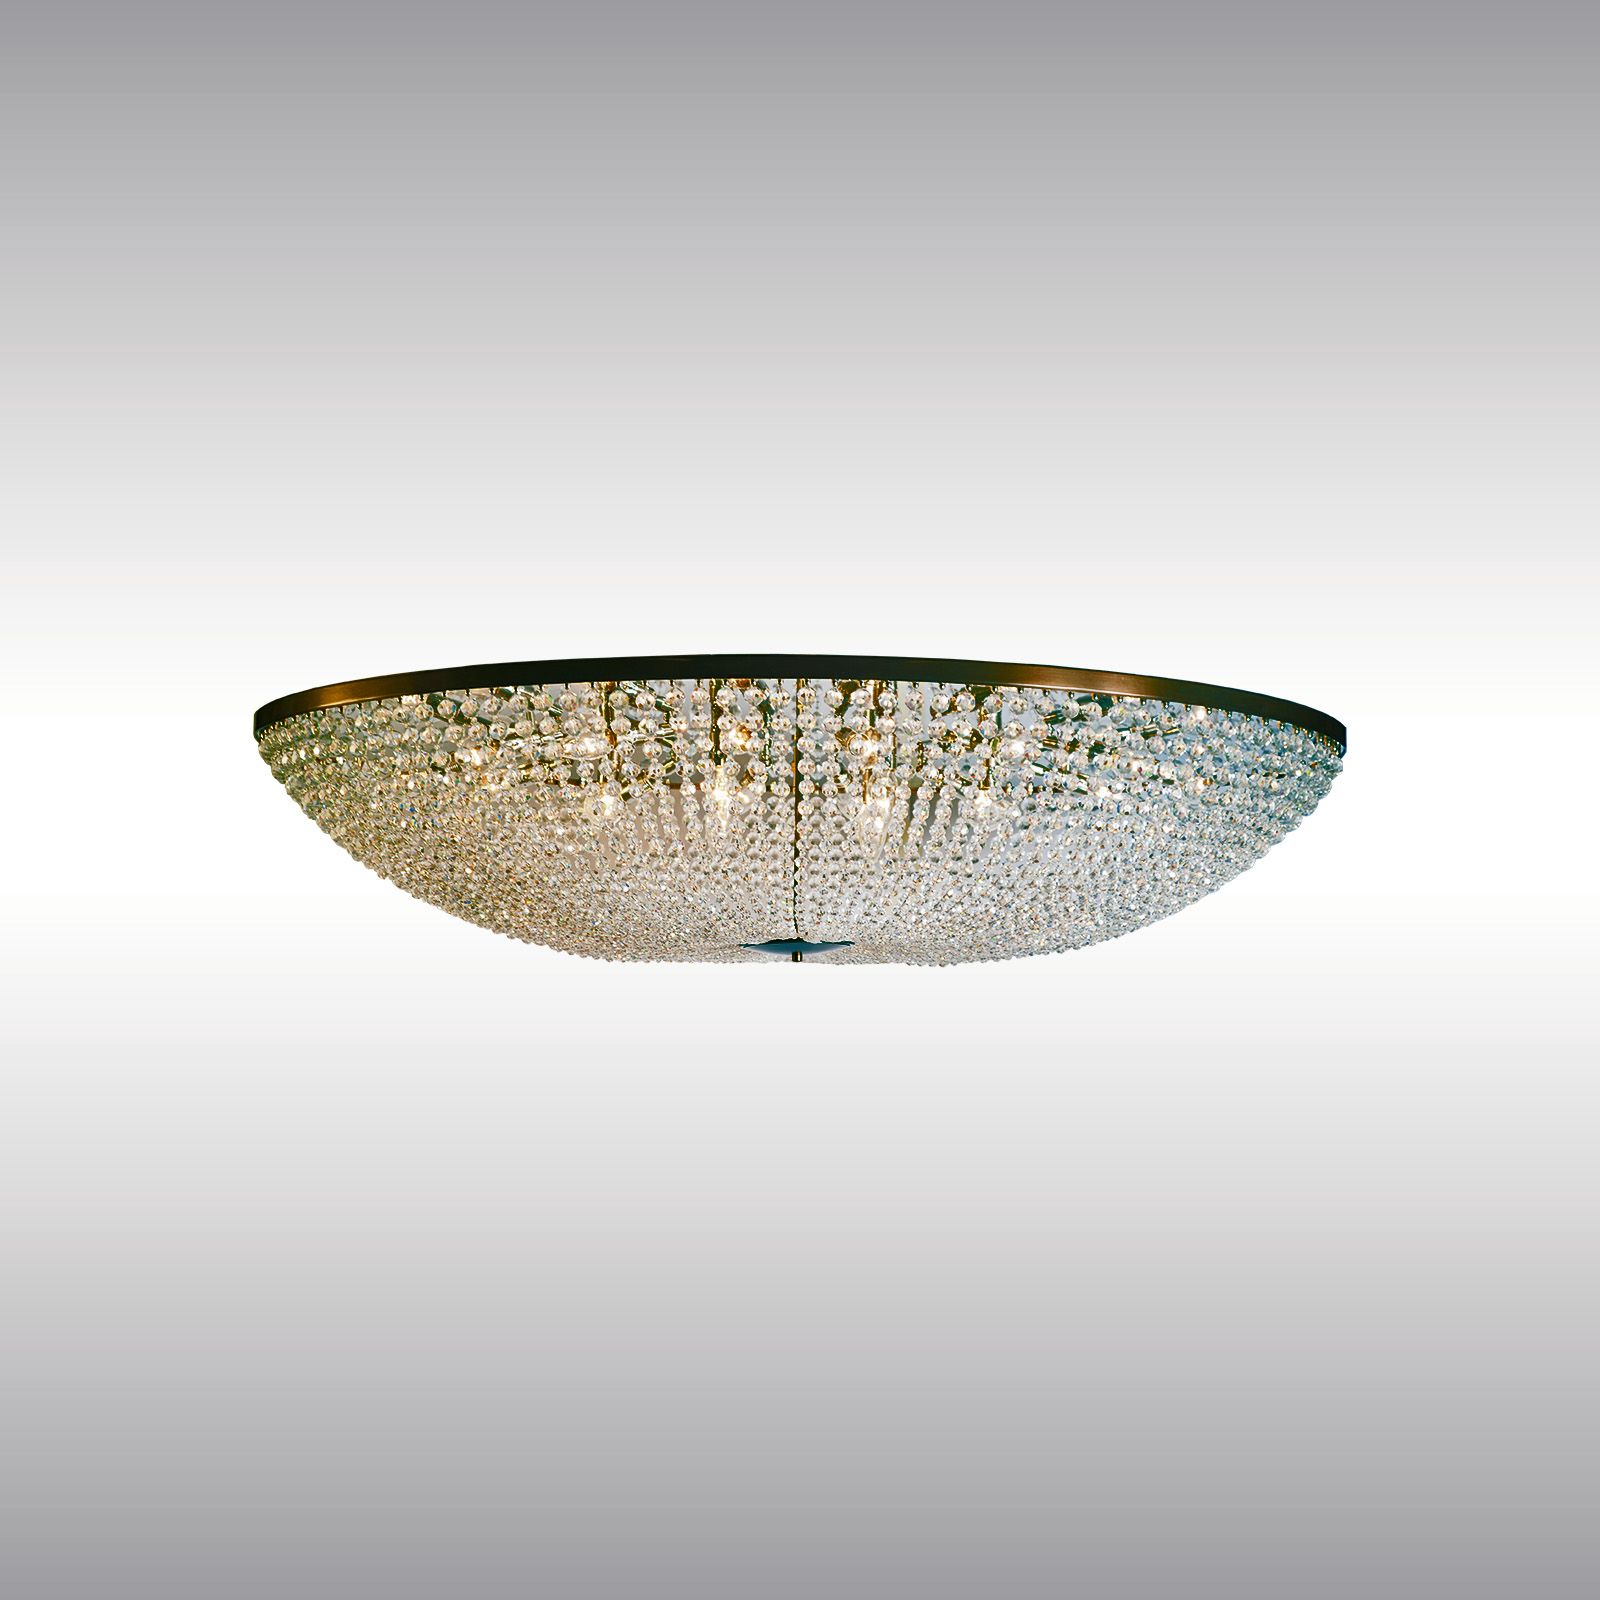 WOKA LAMPS VIENNA - OrderNr.: 21324|Magnificent oval beaded Chandelier for Harry Winston - Design: WOKA